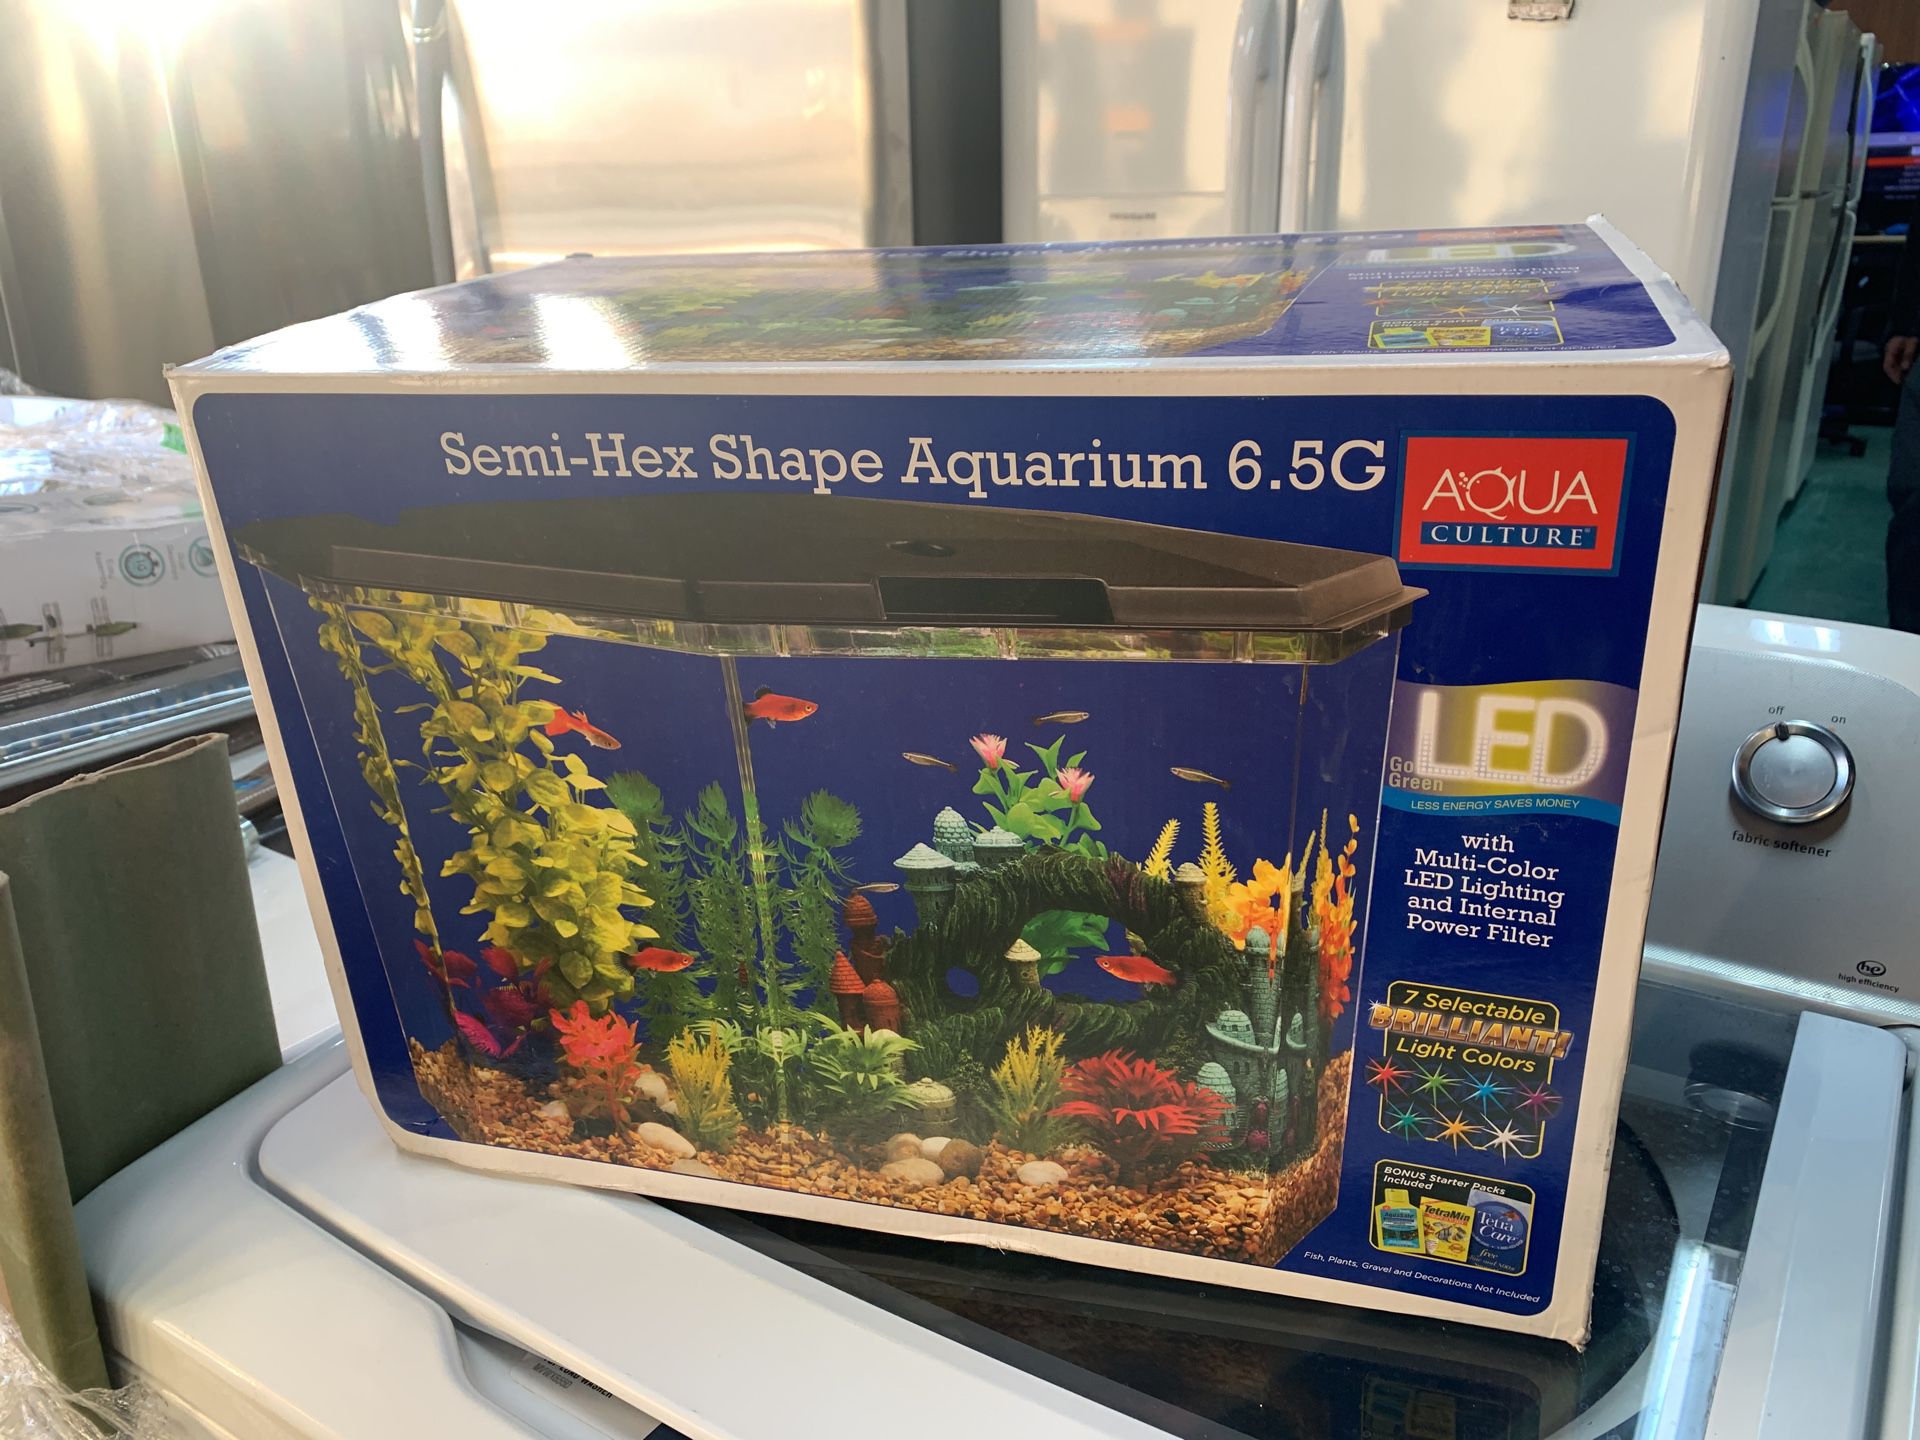 Brand new fish tank